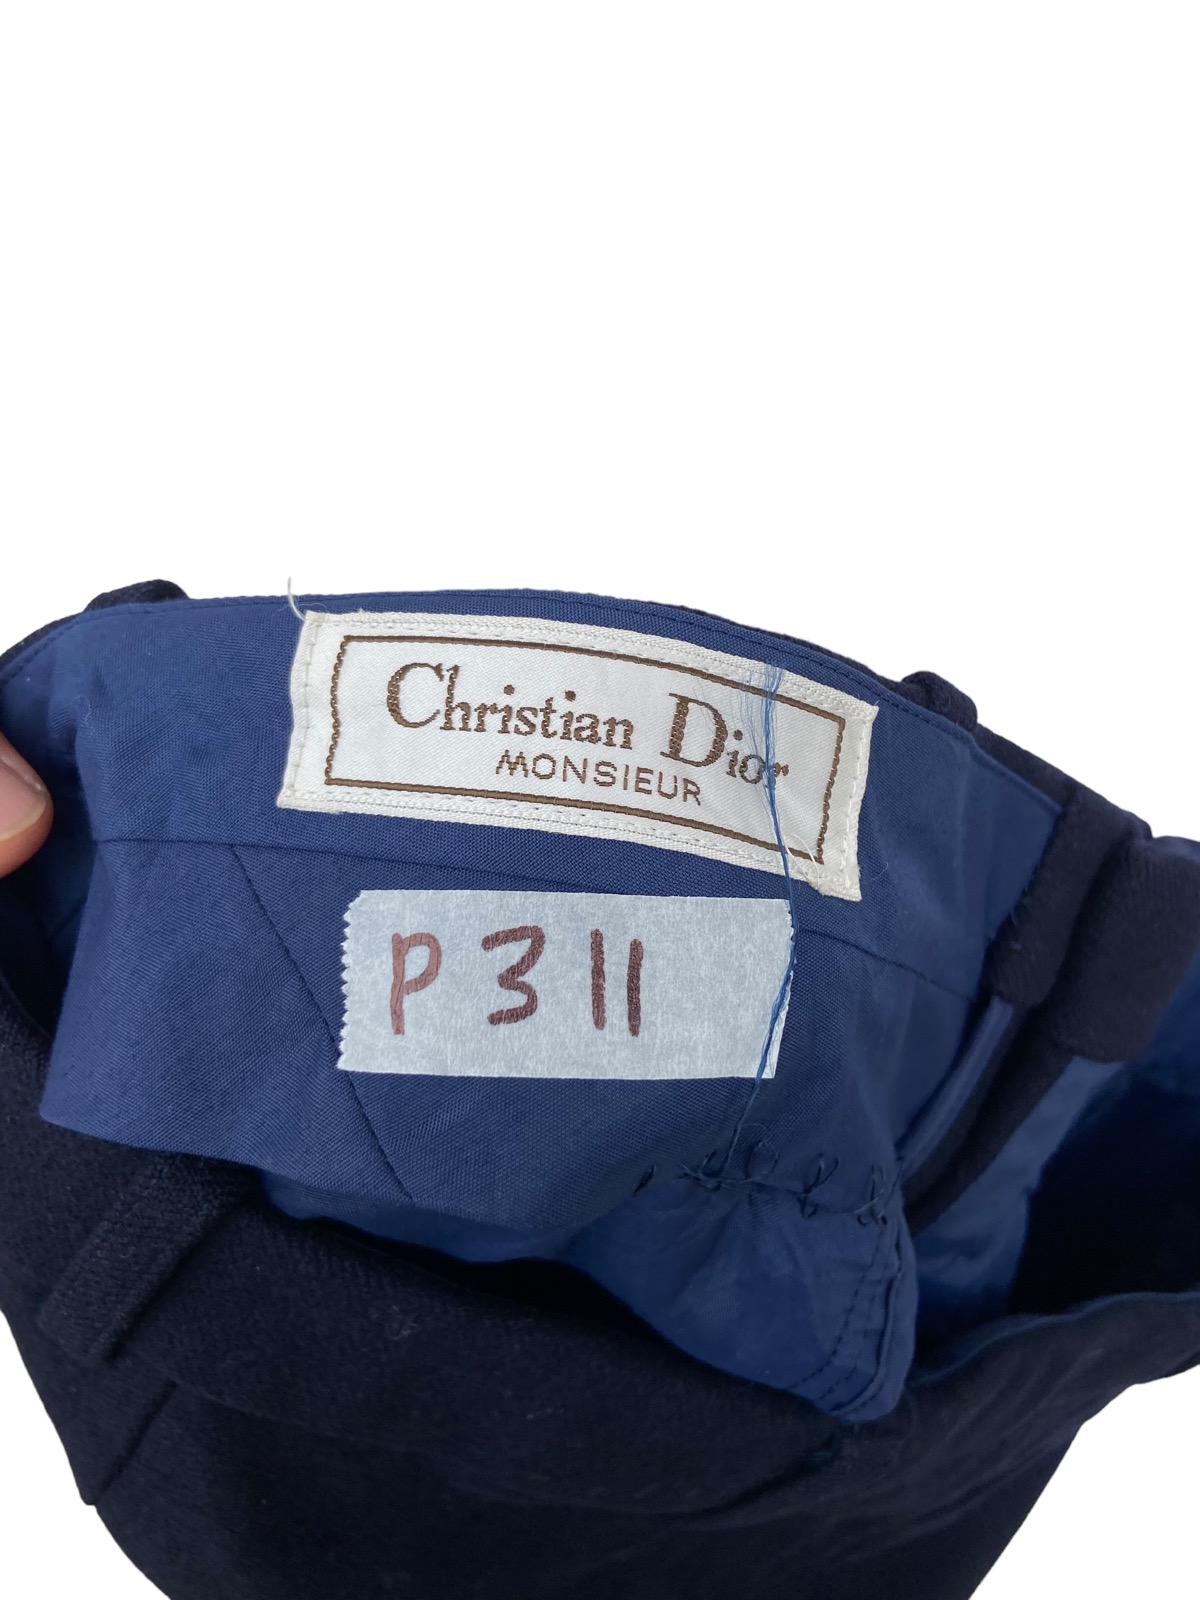 Vintage Christian Dior Pant - 4